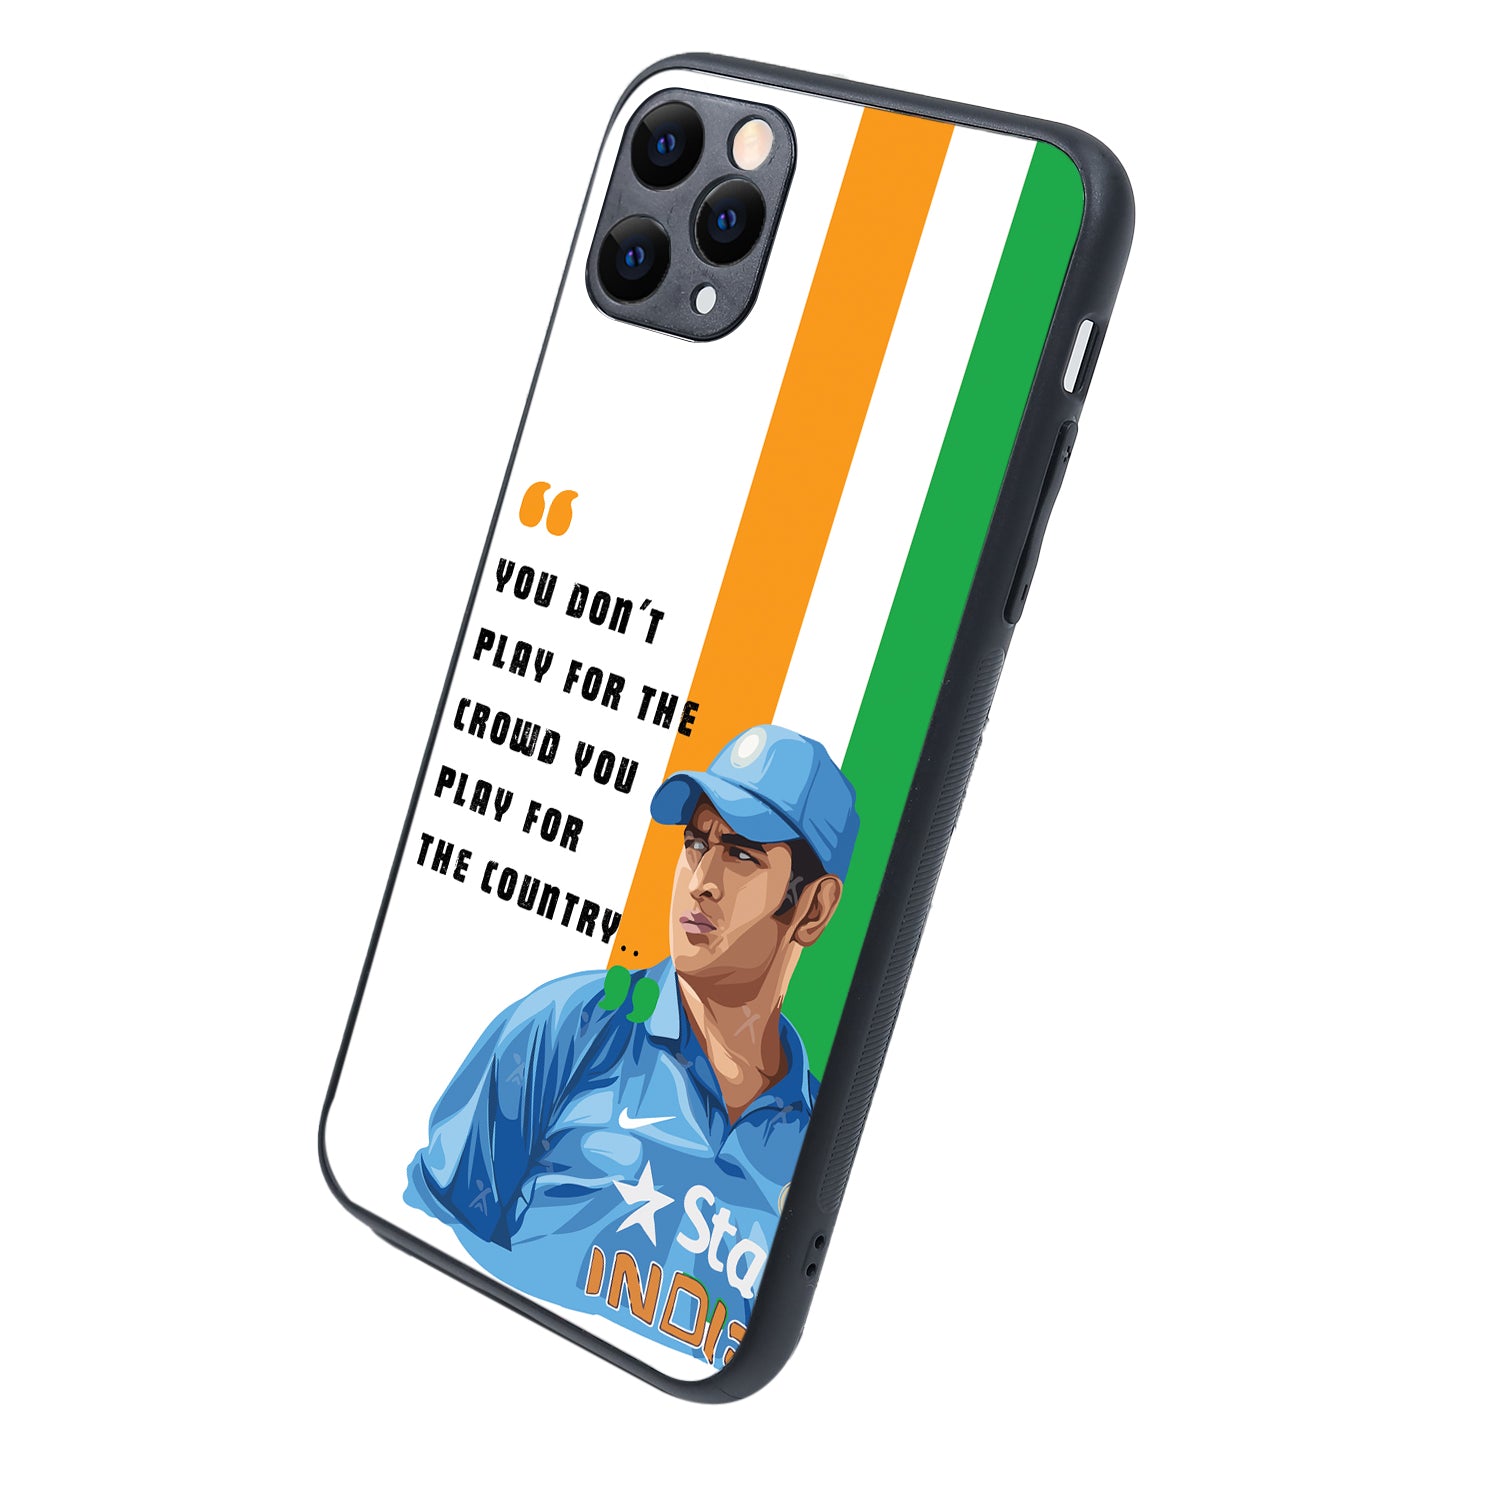 Dhoni Sports iPhone 11 Pro Max Case